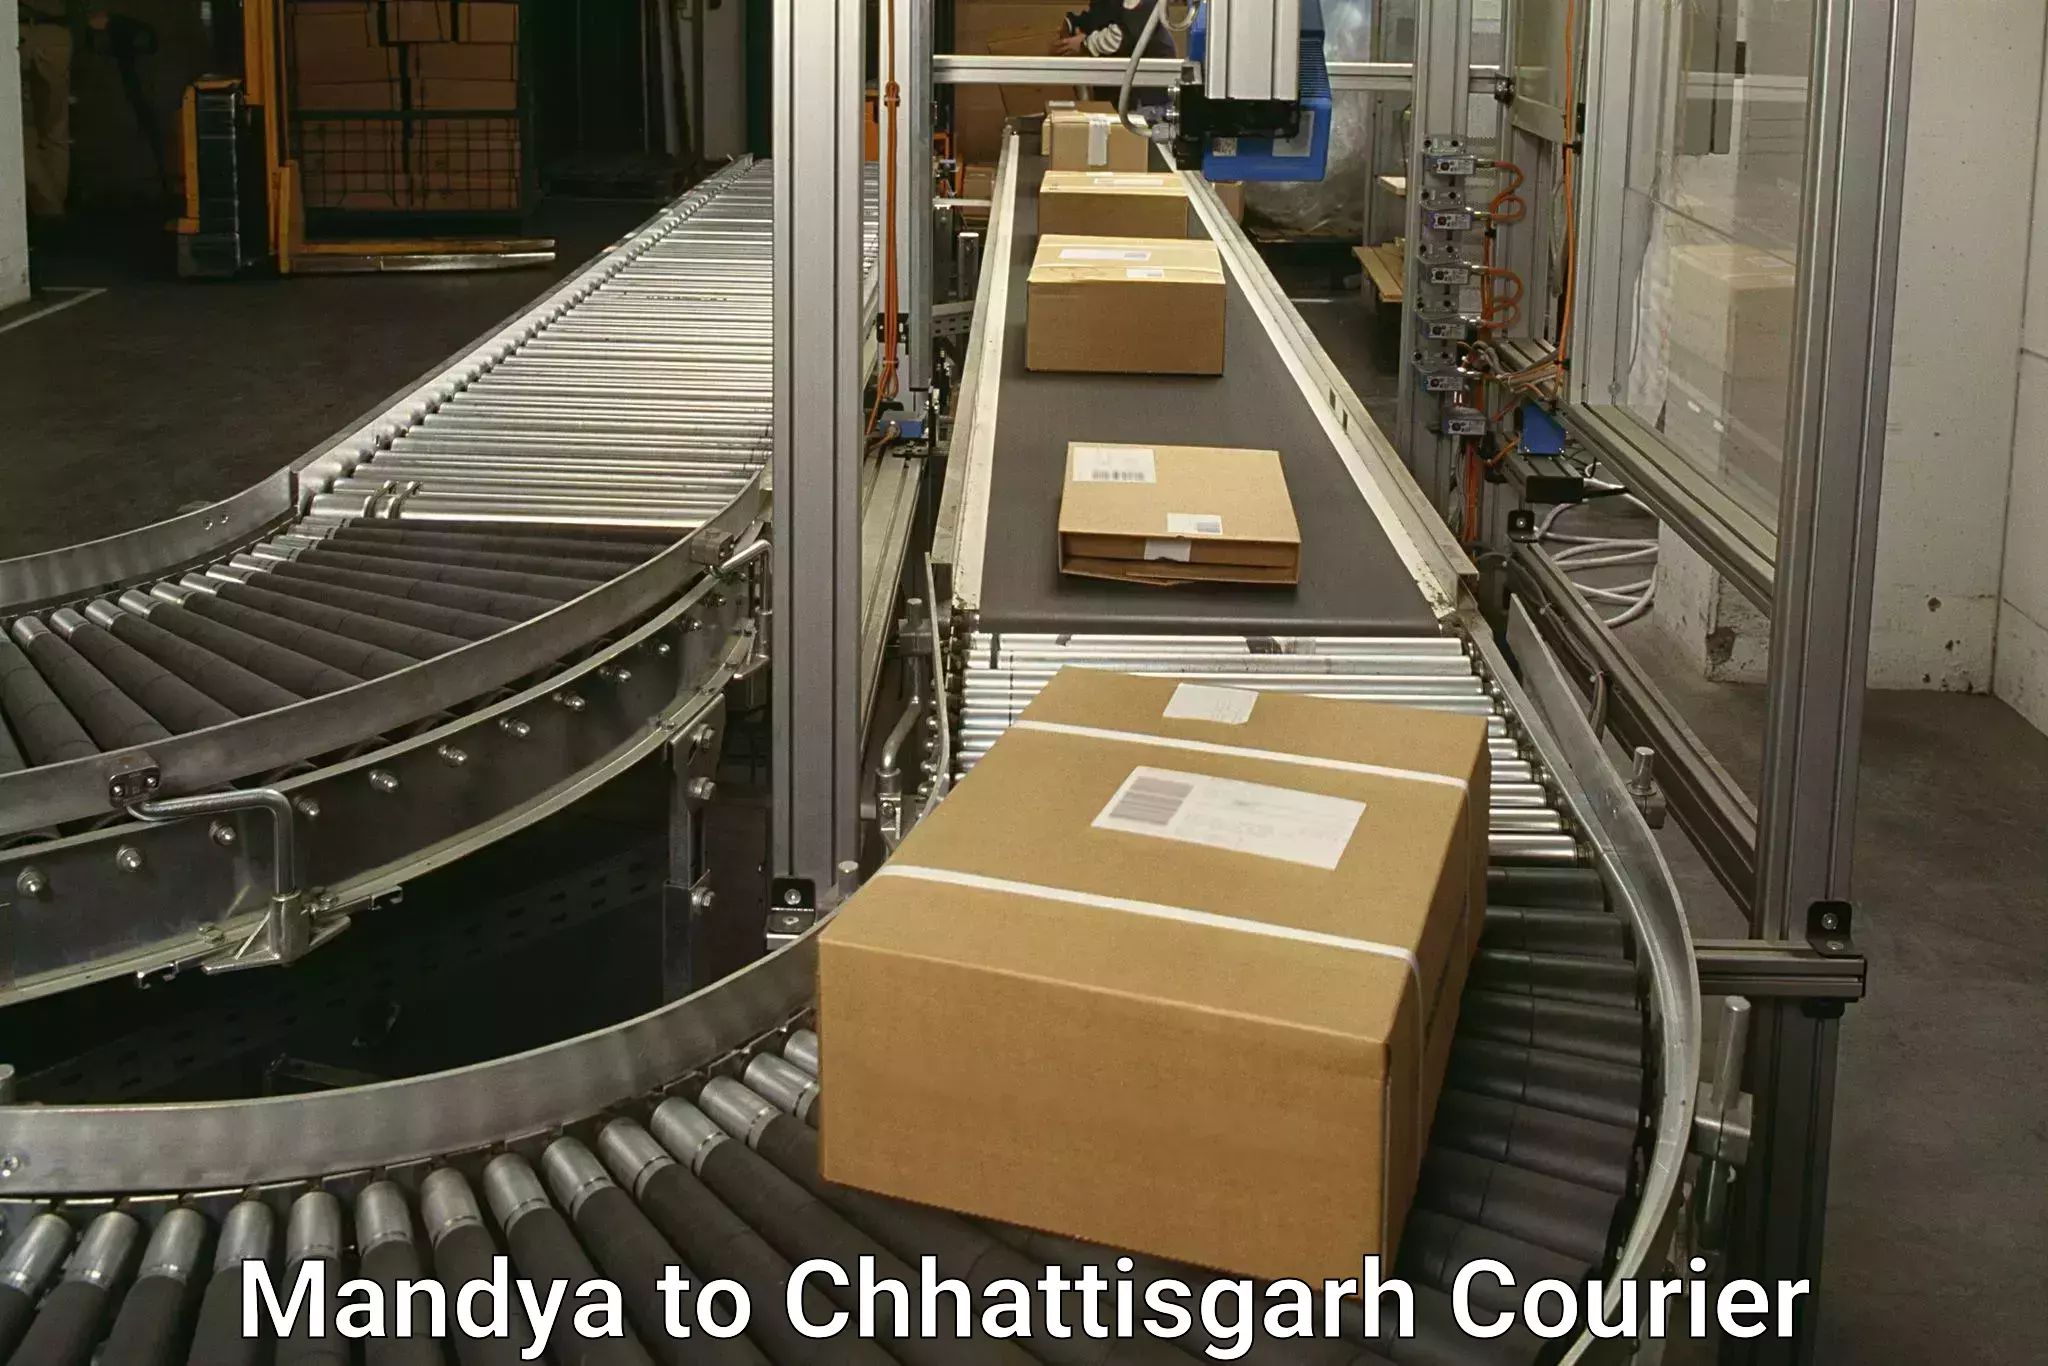 Courier service innovation in Mandya to Chhattisgarh